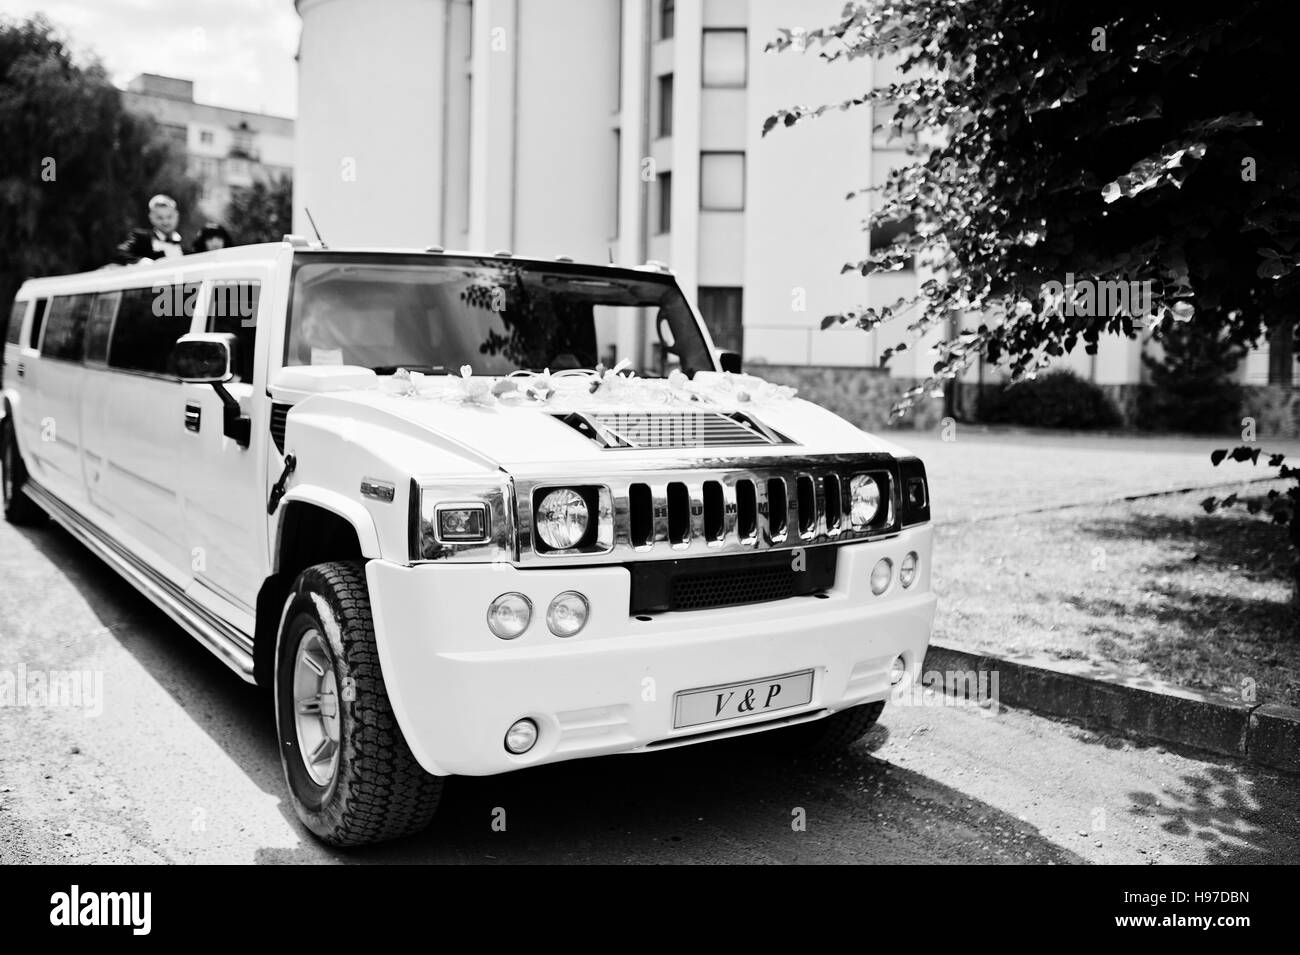 Kyiv, Ukraine - August 31: Elegance white wedding limousine Hummer H2 with newlyweds on car sunroof at wedding day. Black and white photo Stock Photo